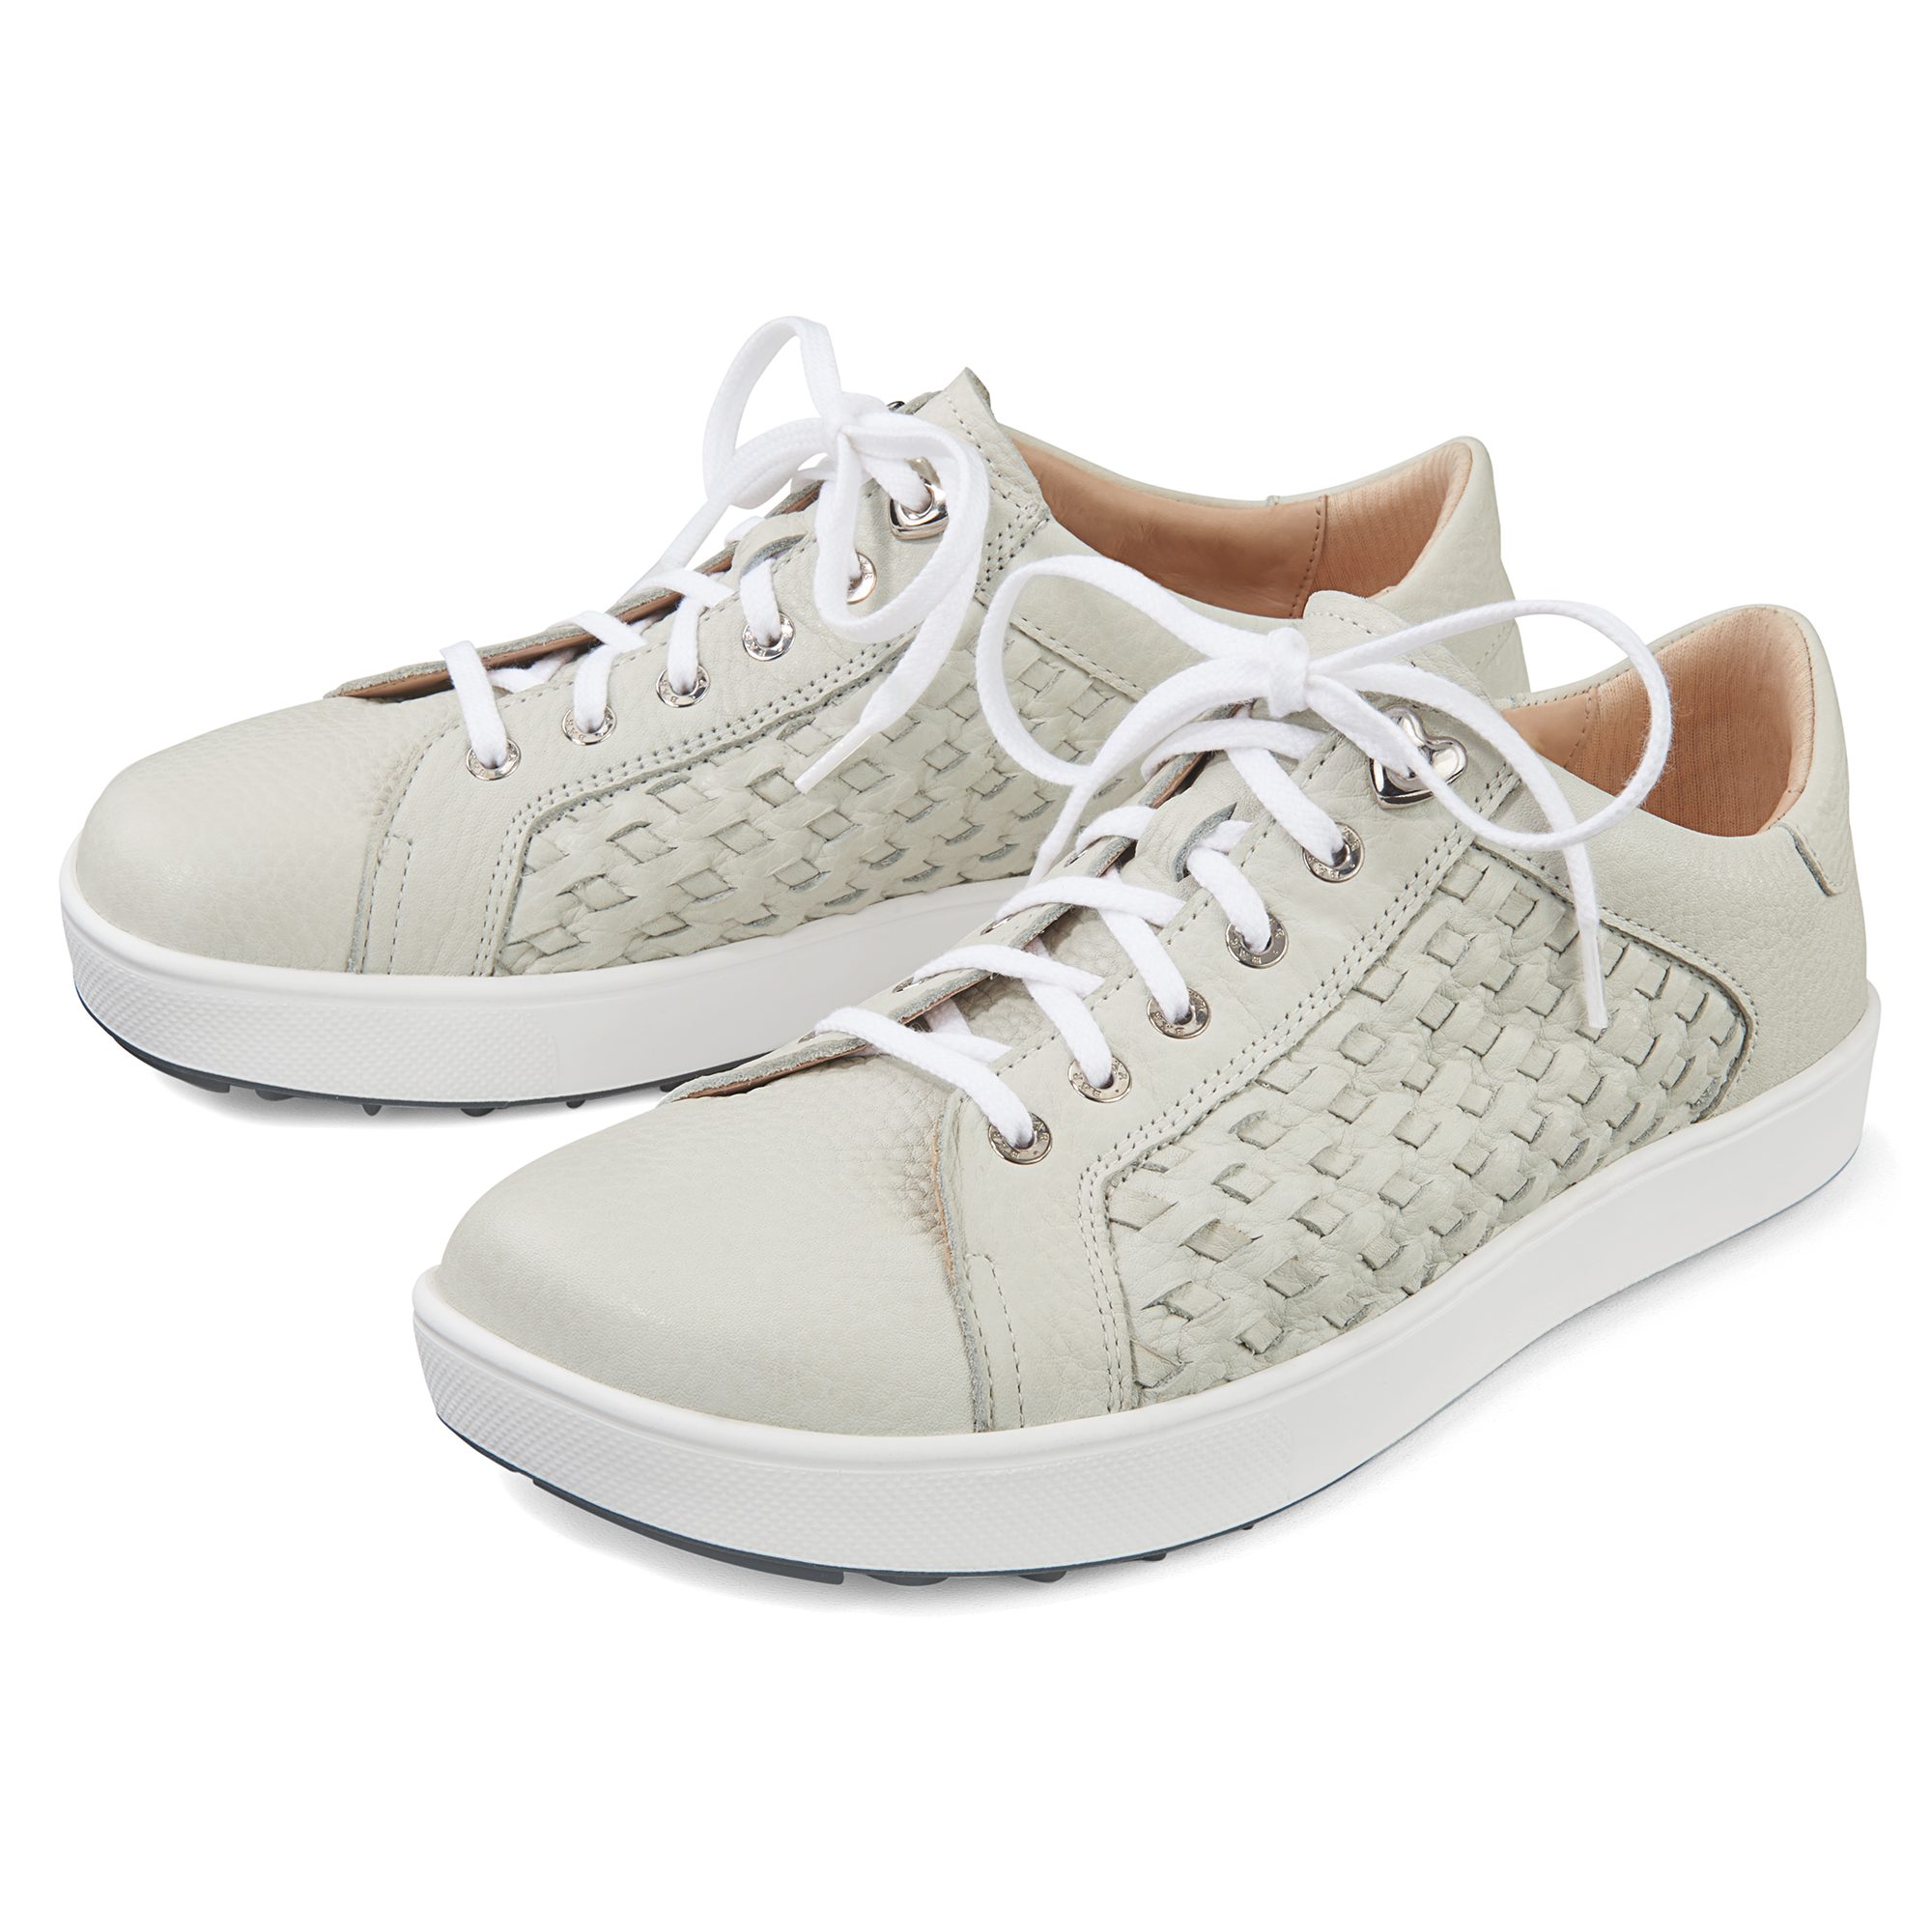 BÄR Damenschuh - Modell Kaya in der Farbe Weiß Sneaker Aus echtem Leder